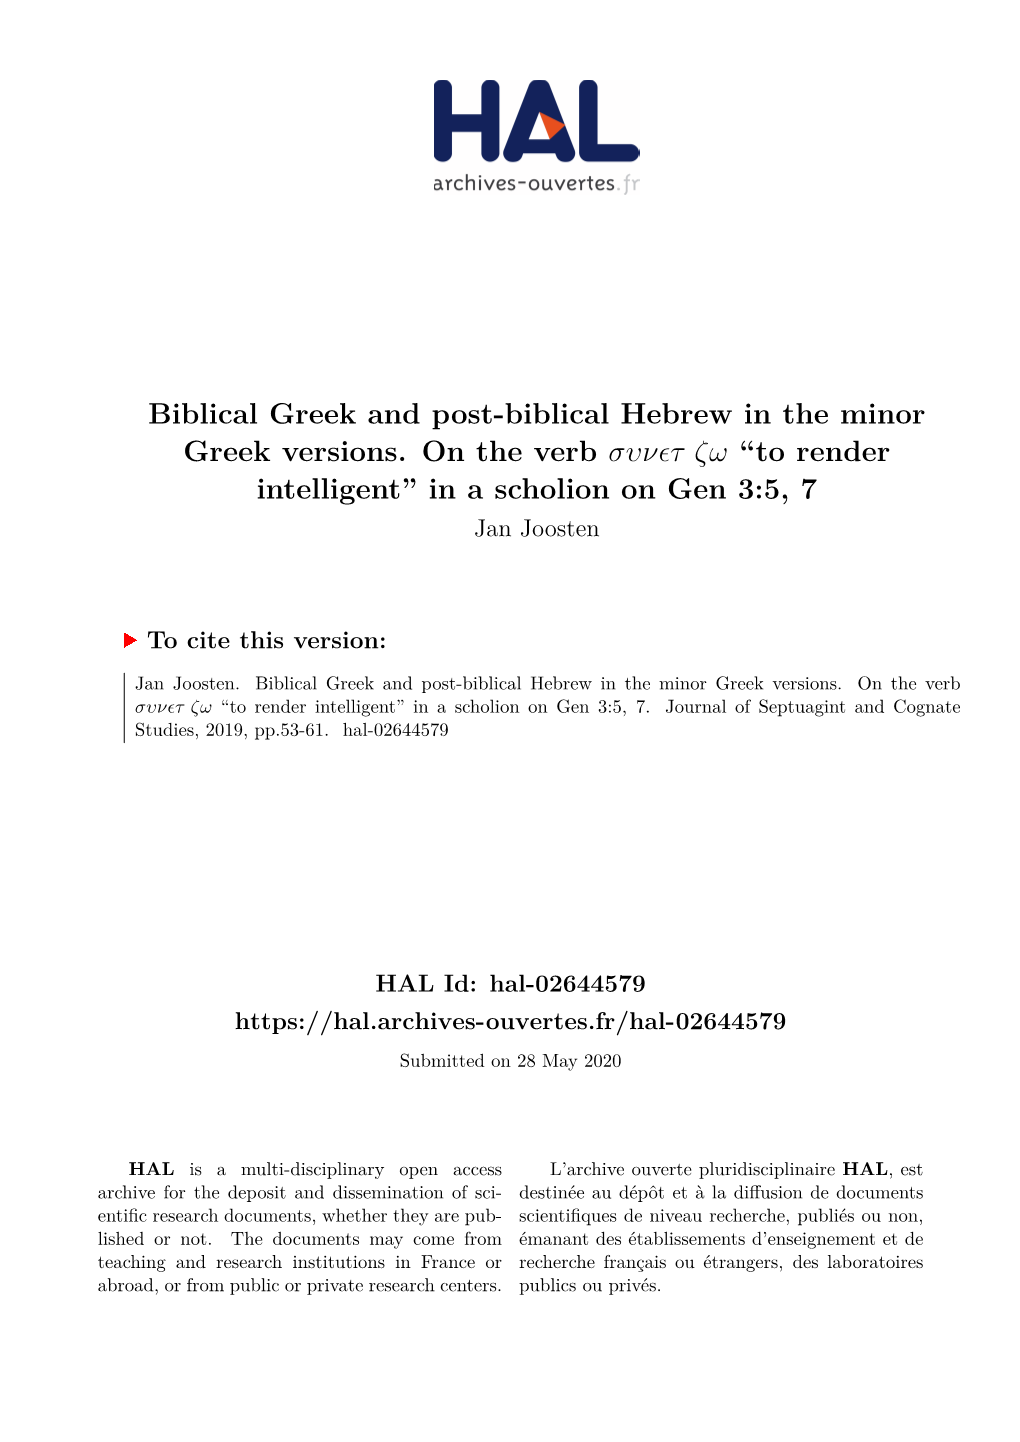 Biblical Greek and Post-Biblical Hebrew in the Minor Greek Versions